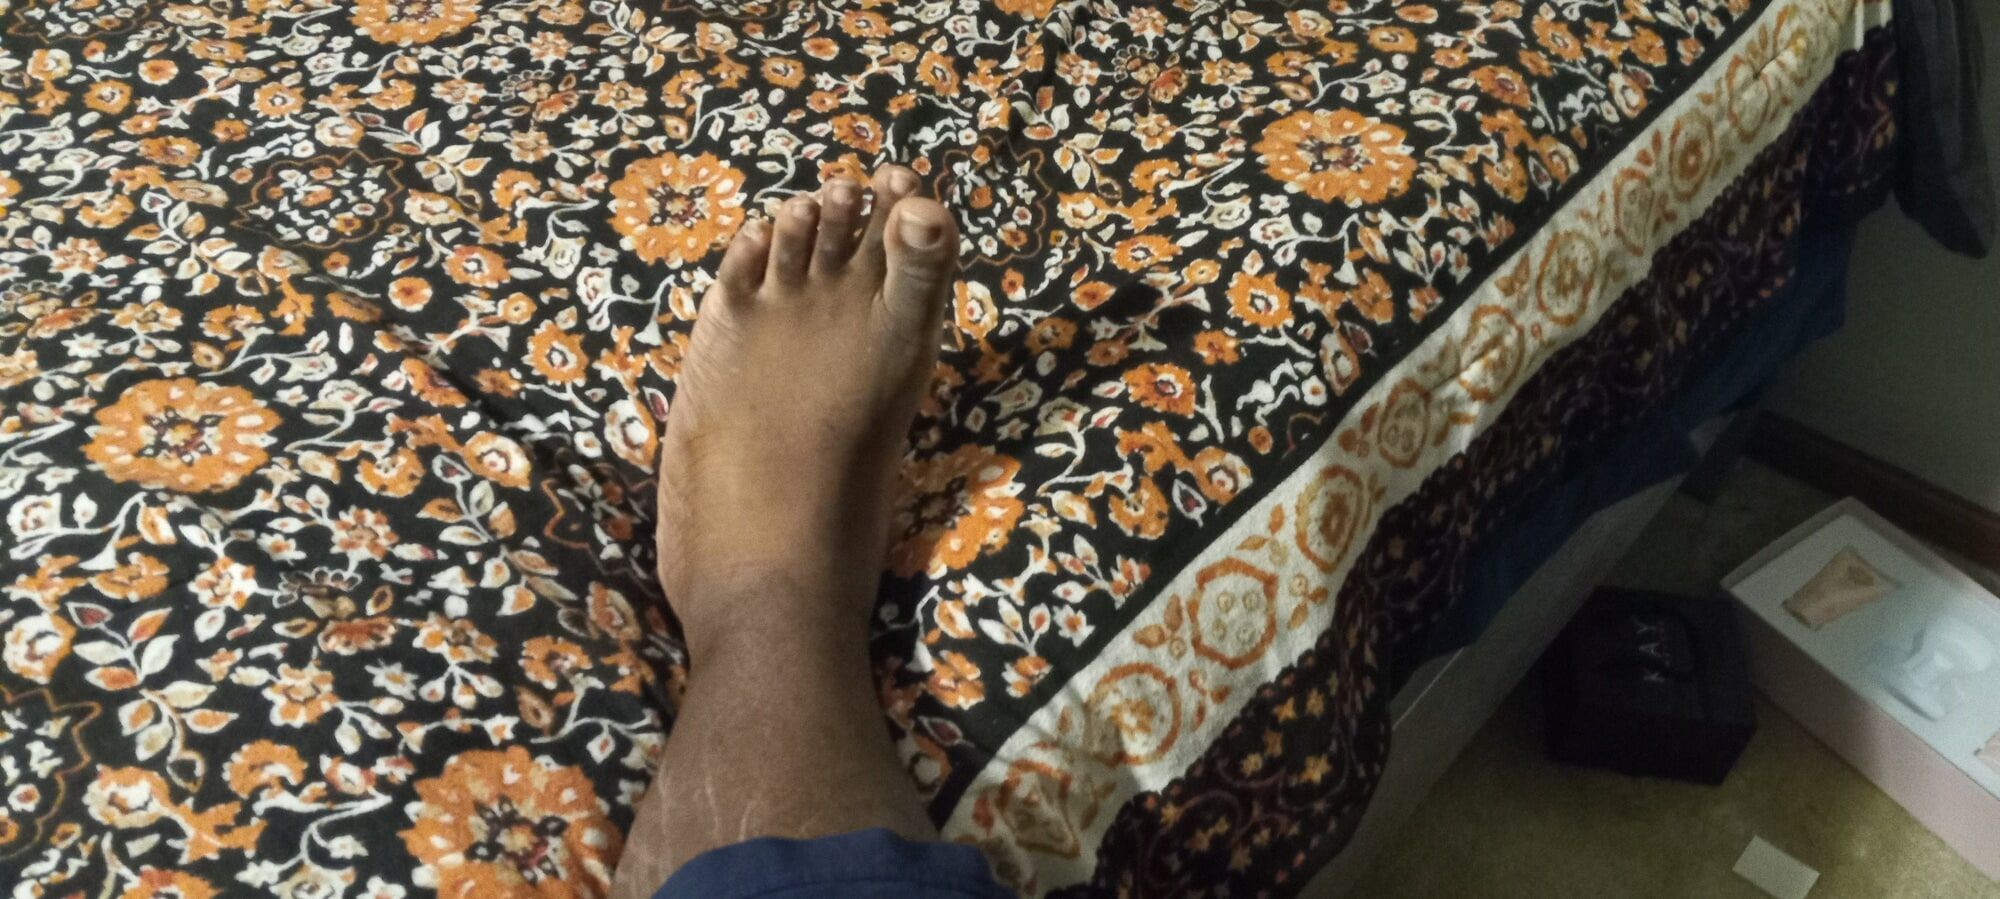 Pics of my Feet #5